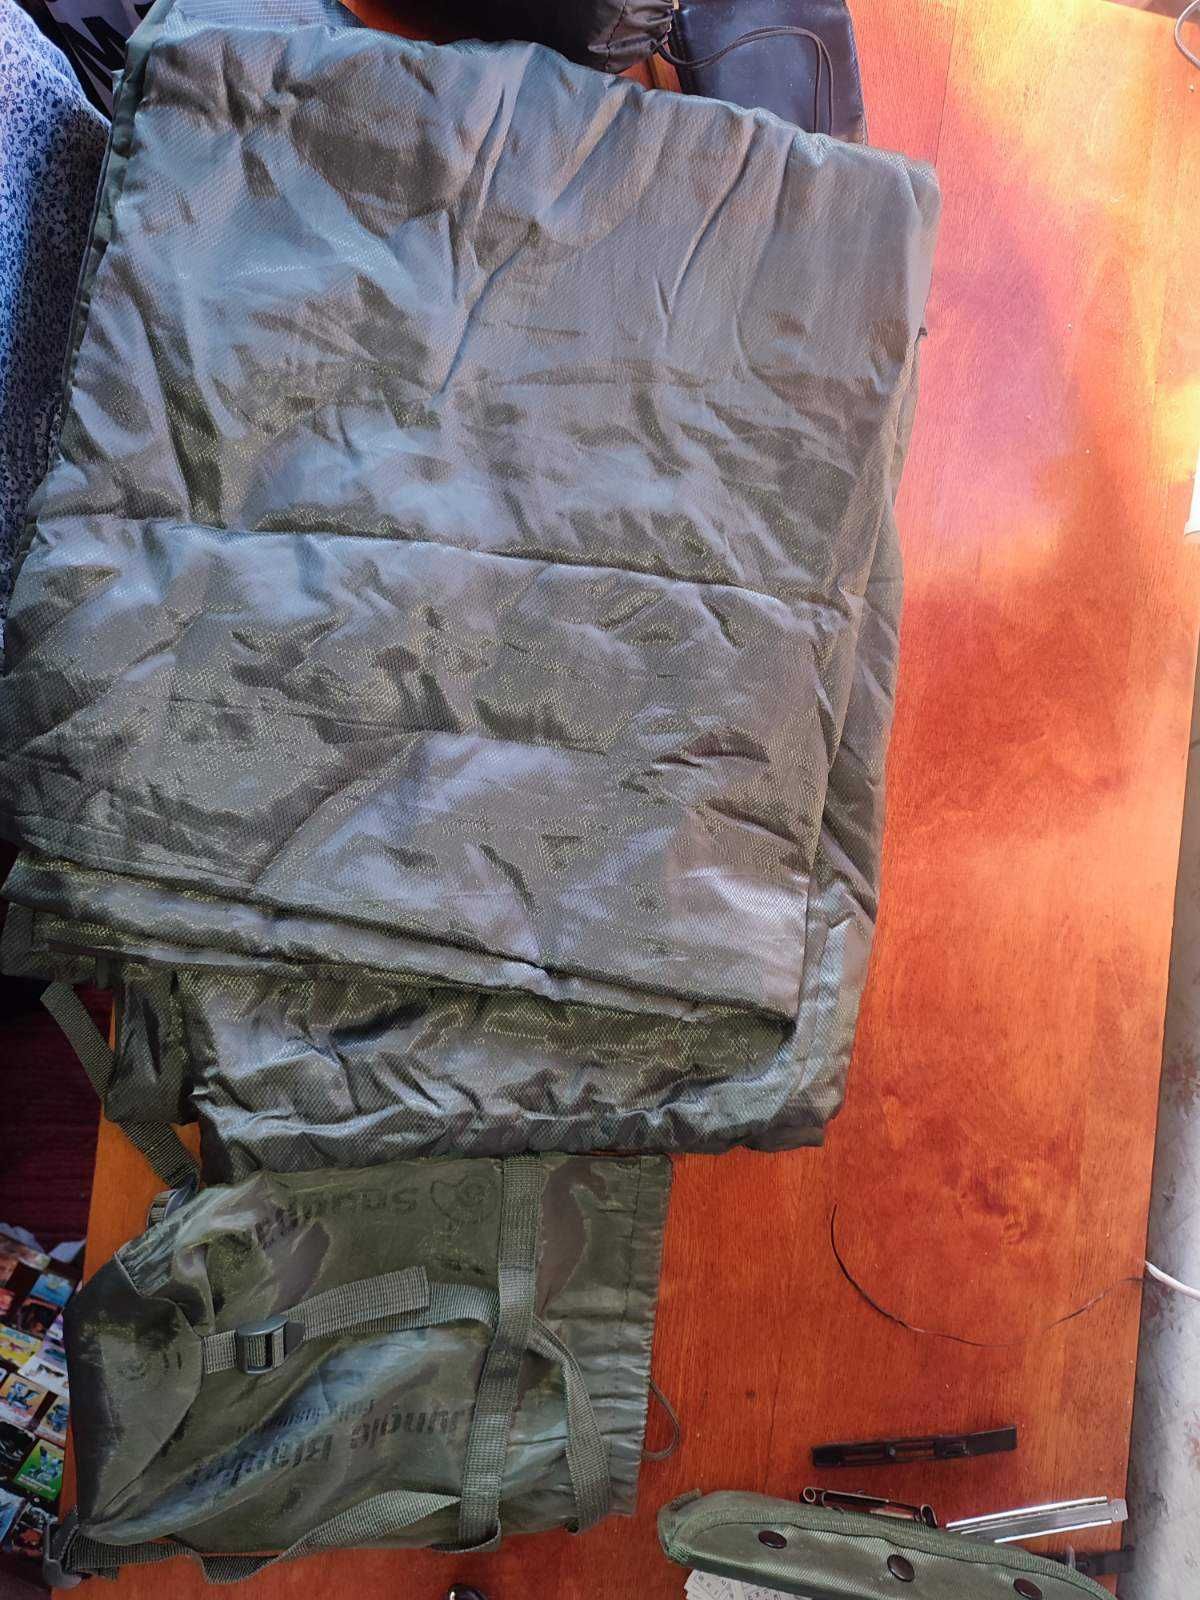 Одеяло тактическое Snugpak JUNGLE BLANKET (олива)